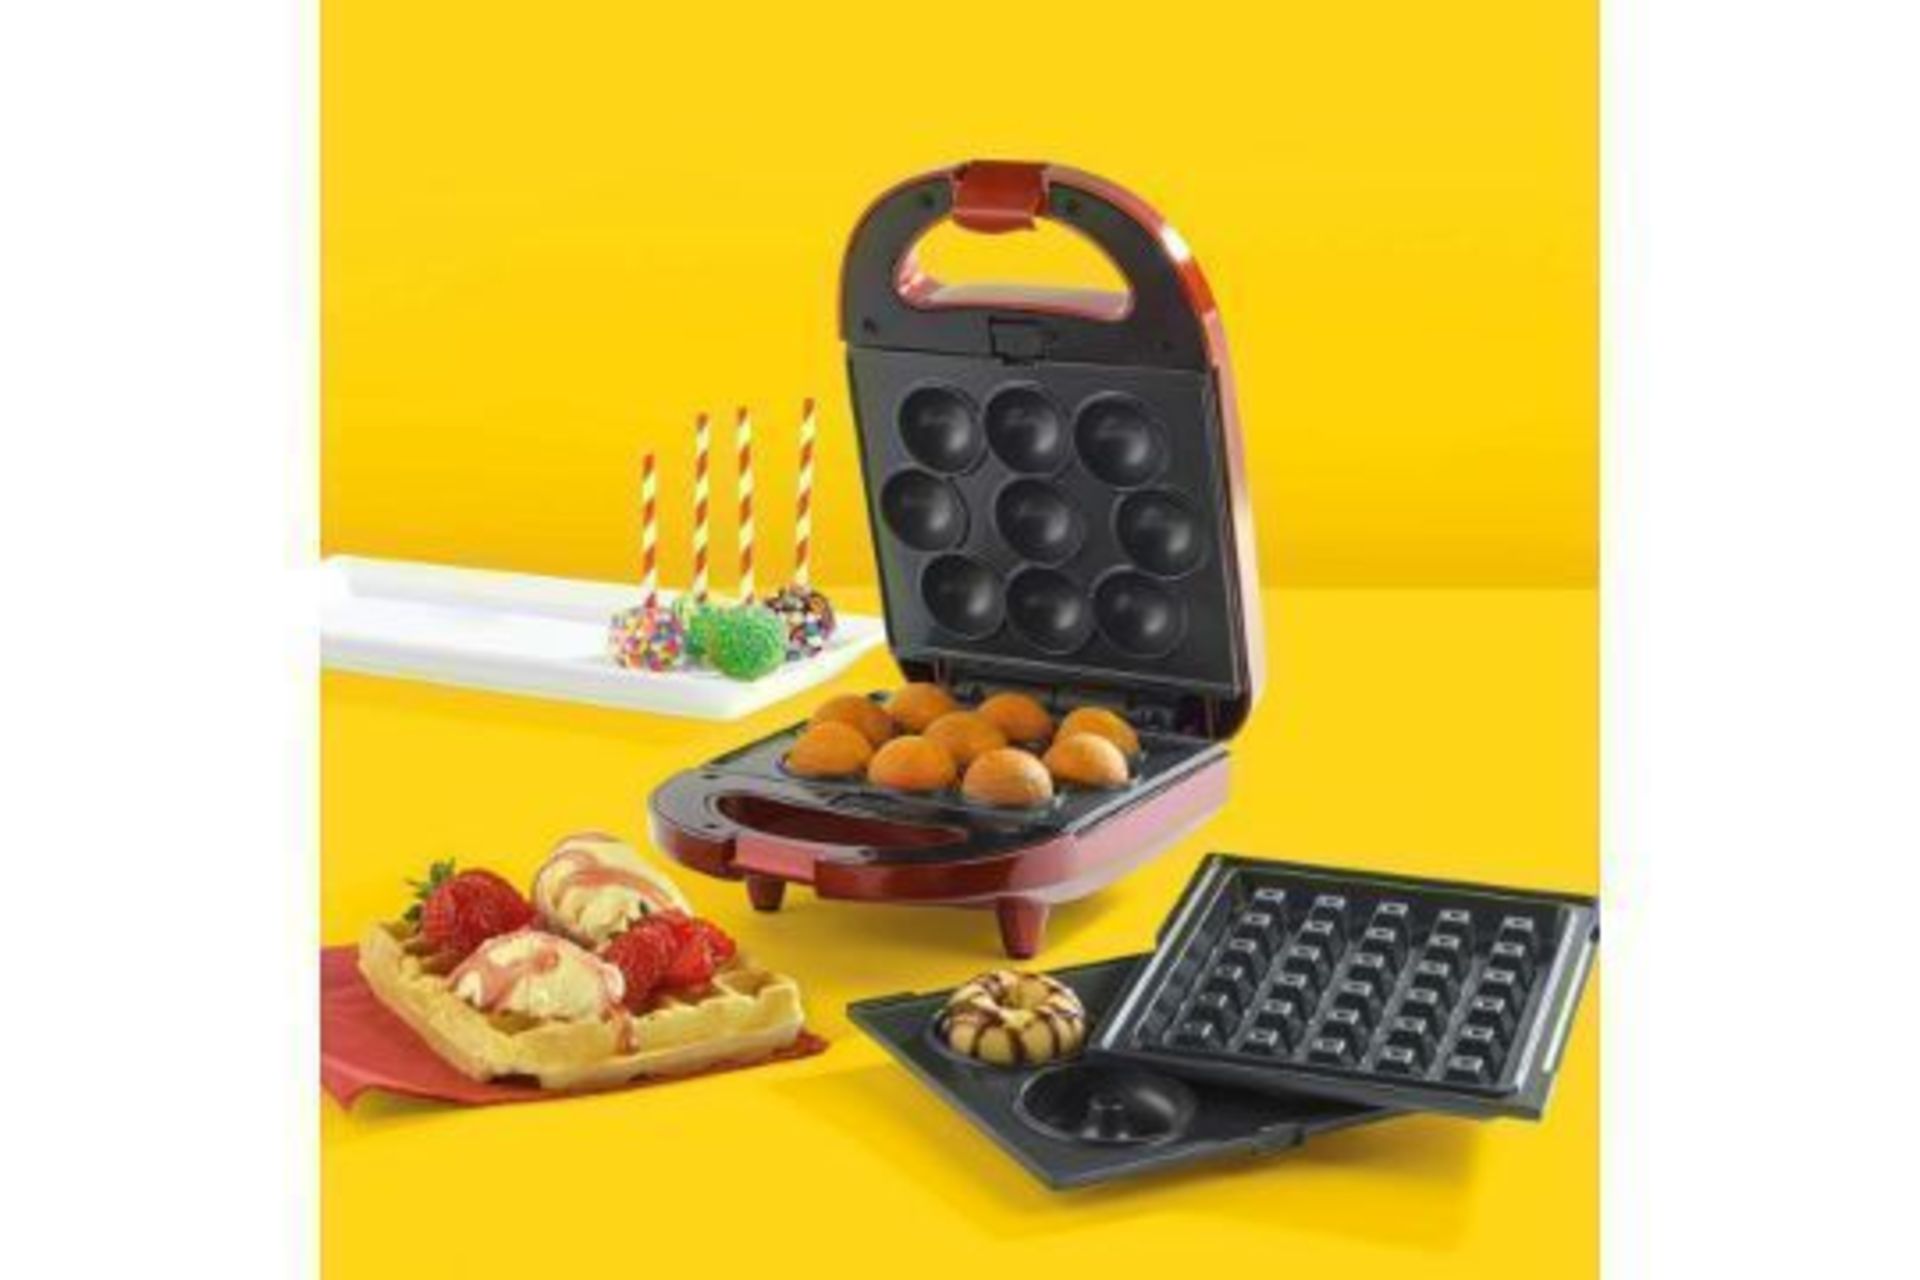 New Giles & Posner 3 in 1 Treat Maker Doughnut Cake Pop & Waffle Maker - RRP £39.99. - Image 3 of 3